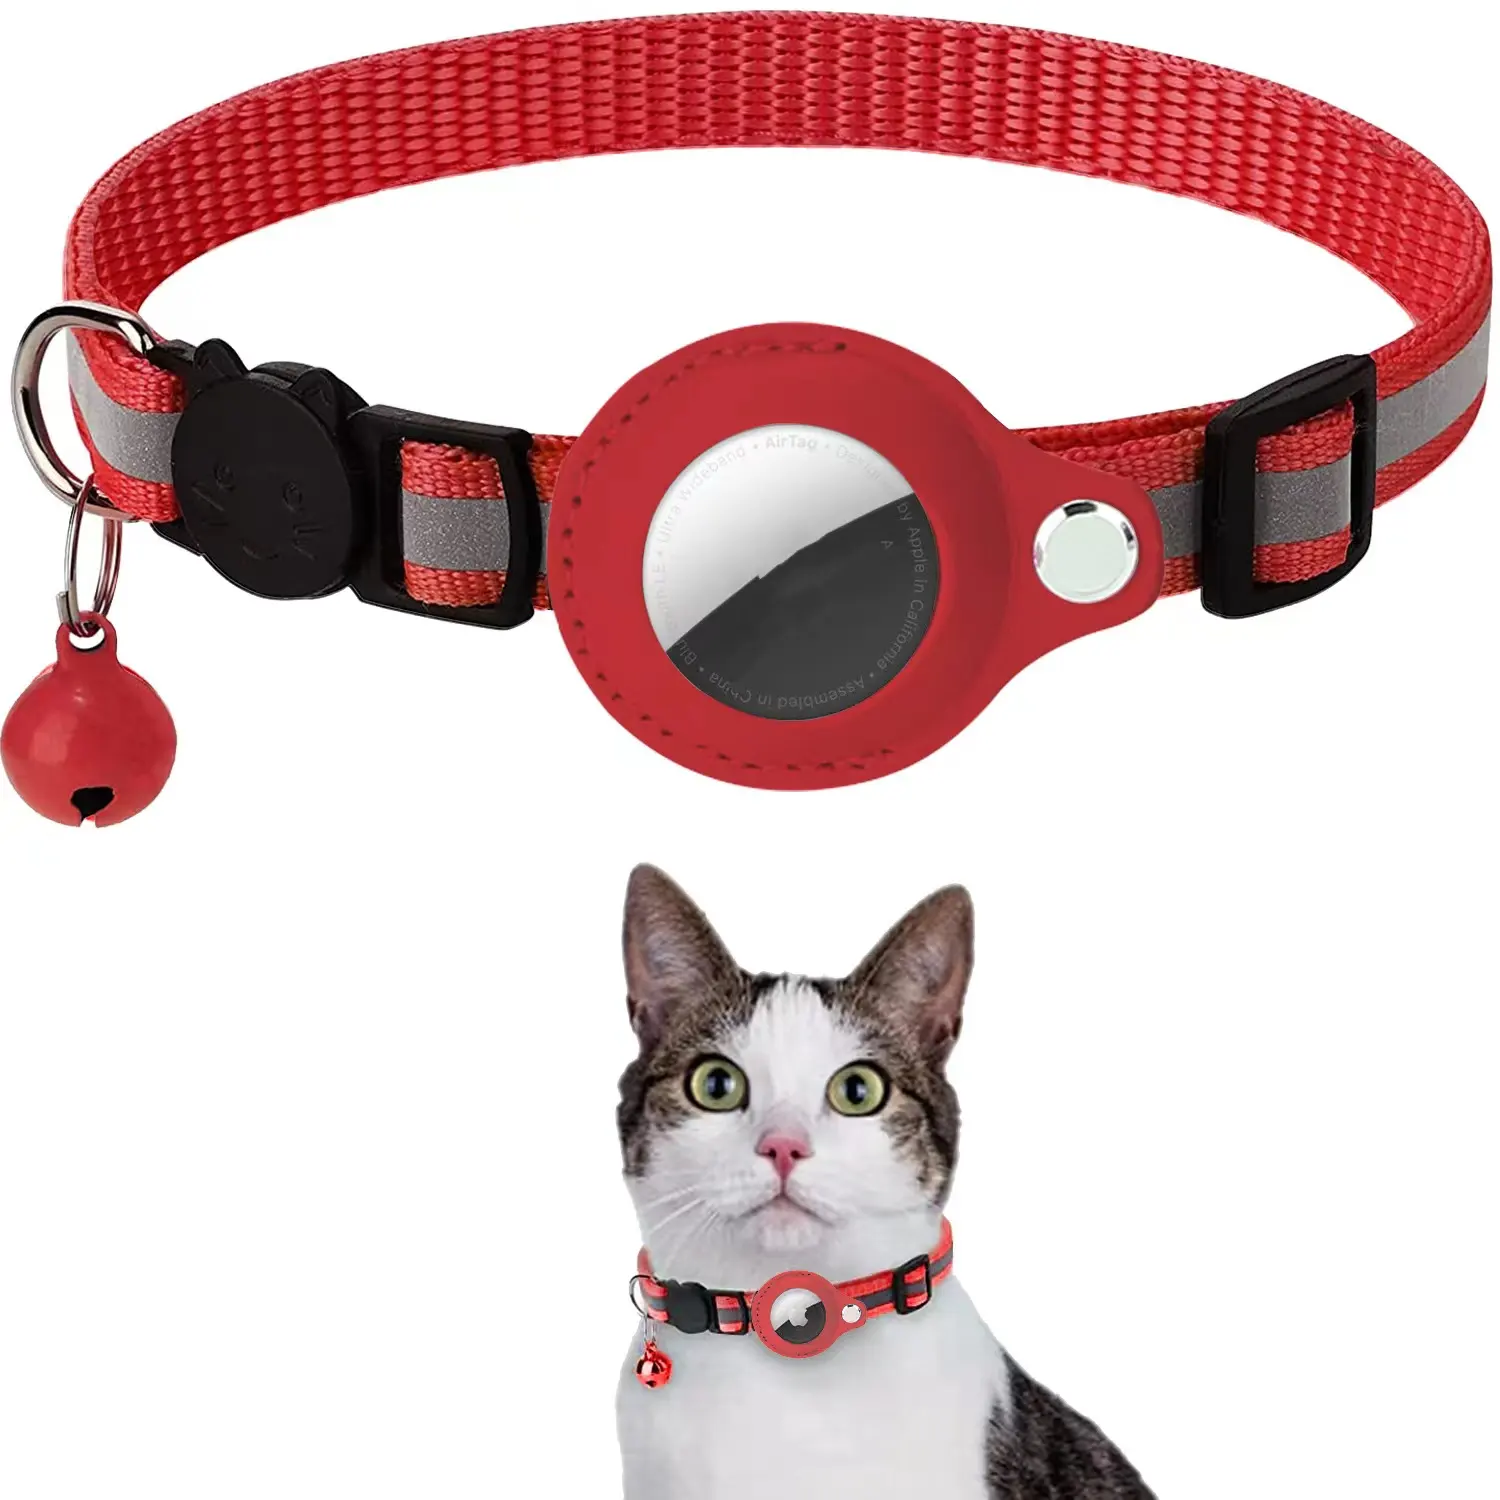 Leyi人気の猫のデザインペットトラッカーカバー損失防止調整可能な小さなベル猫の首輪GPSトラッカー用保護ケース